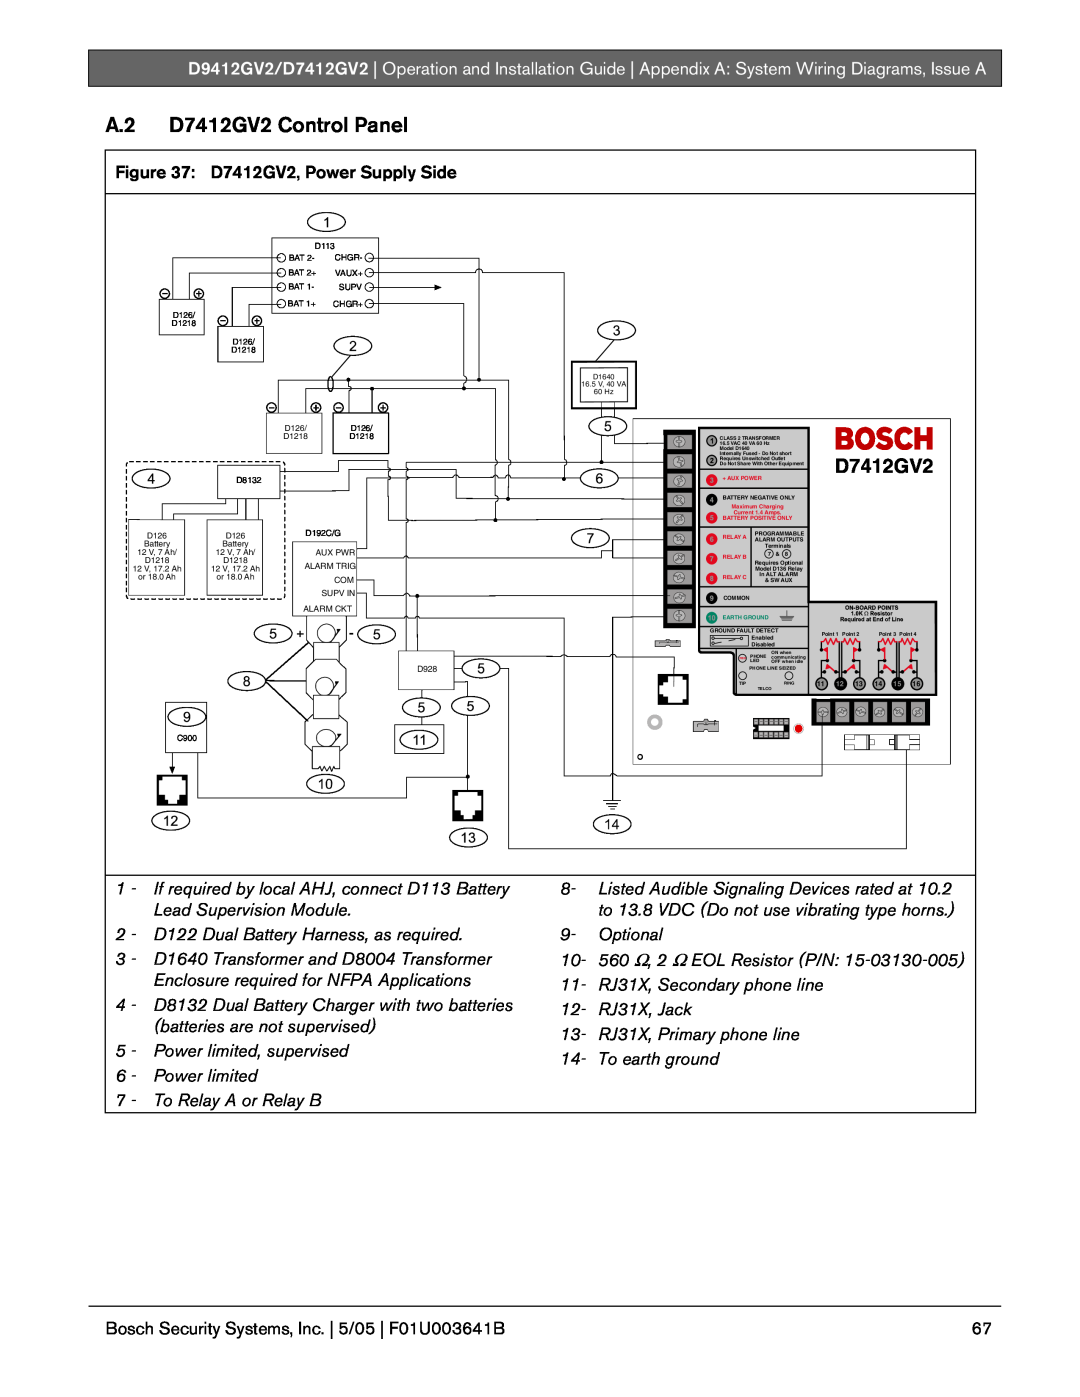 Bosch Appliances D9412GV2 manual A.2 D7412GV2 Control Panel 